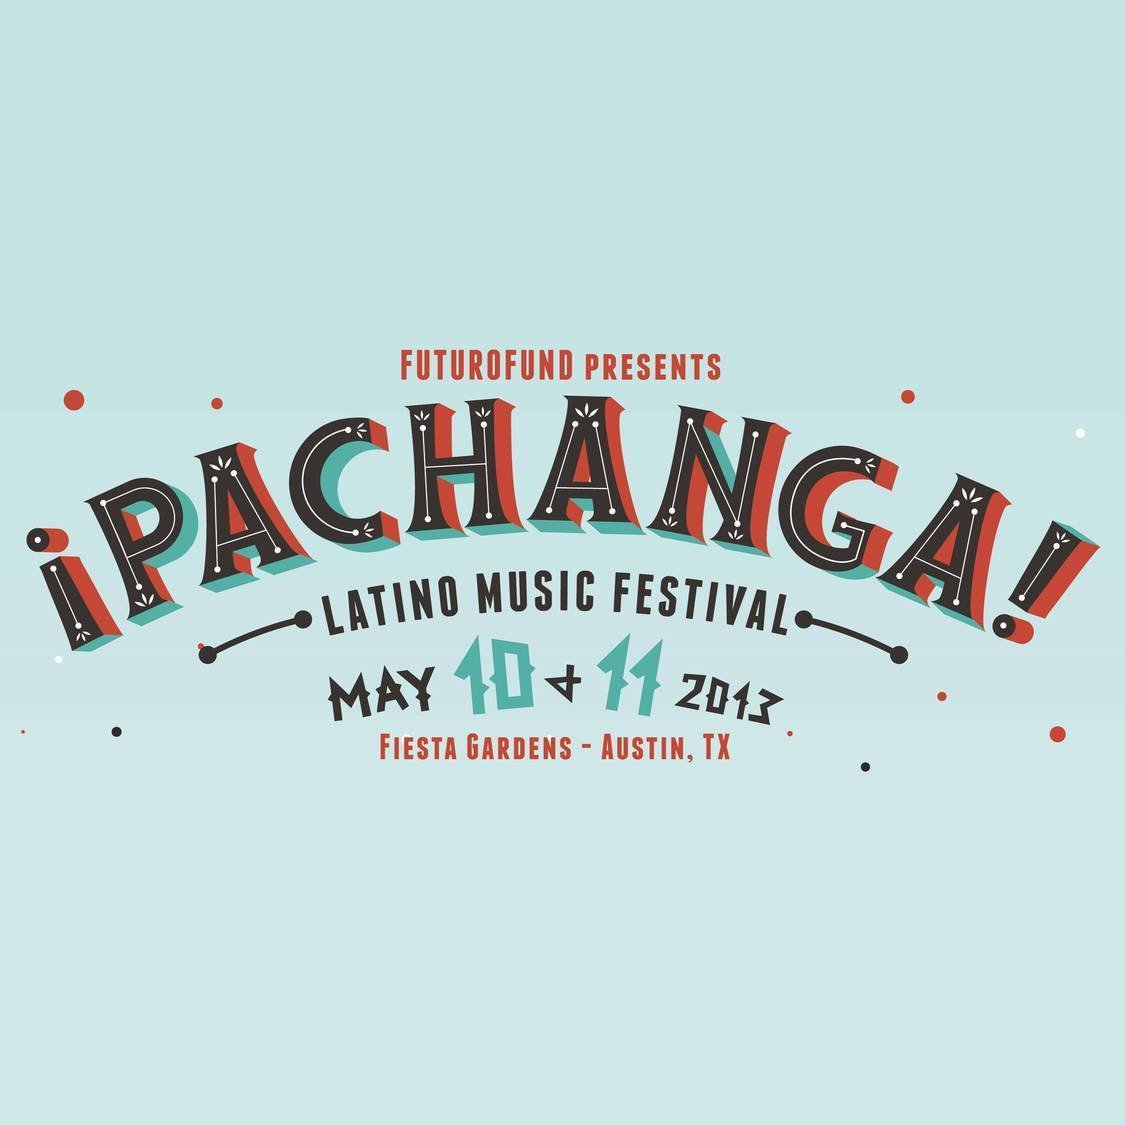 Pachanga Latino Music Festival | ReverbNation